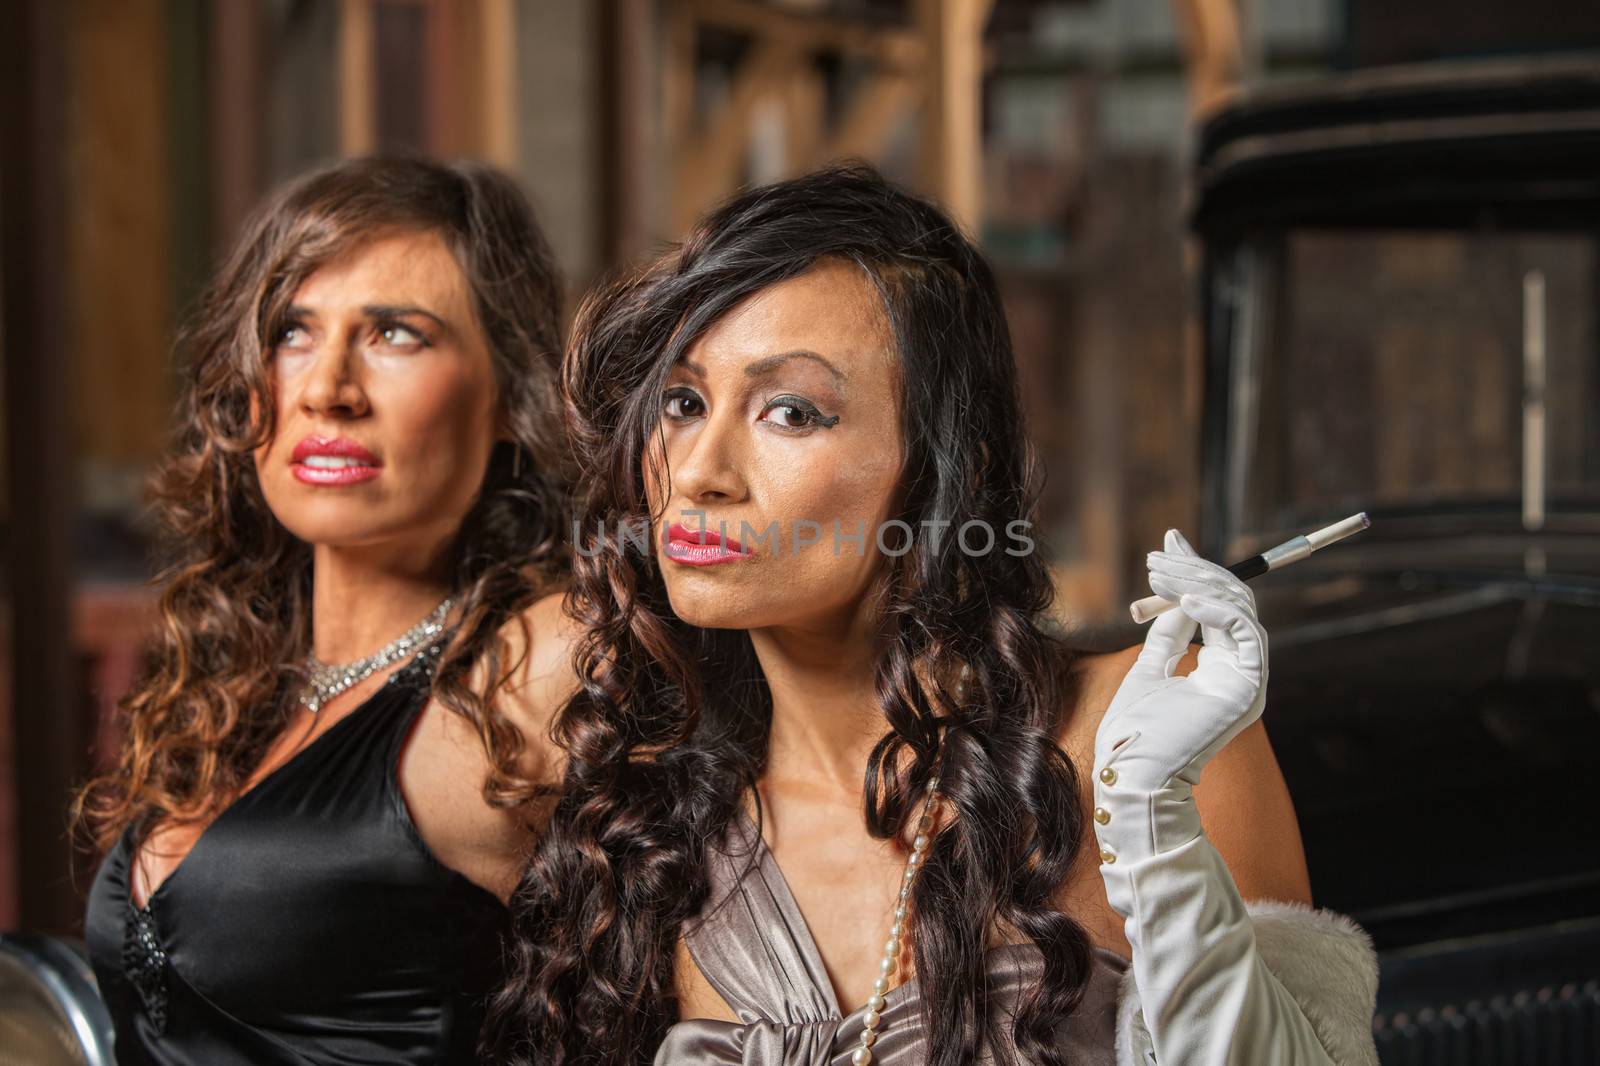 Two beautiful Latino women in retro style dresses